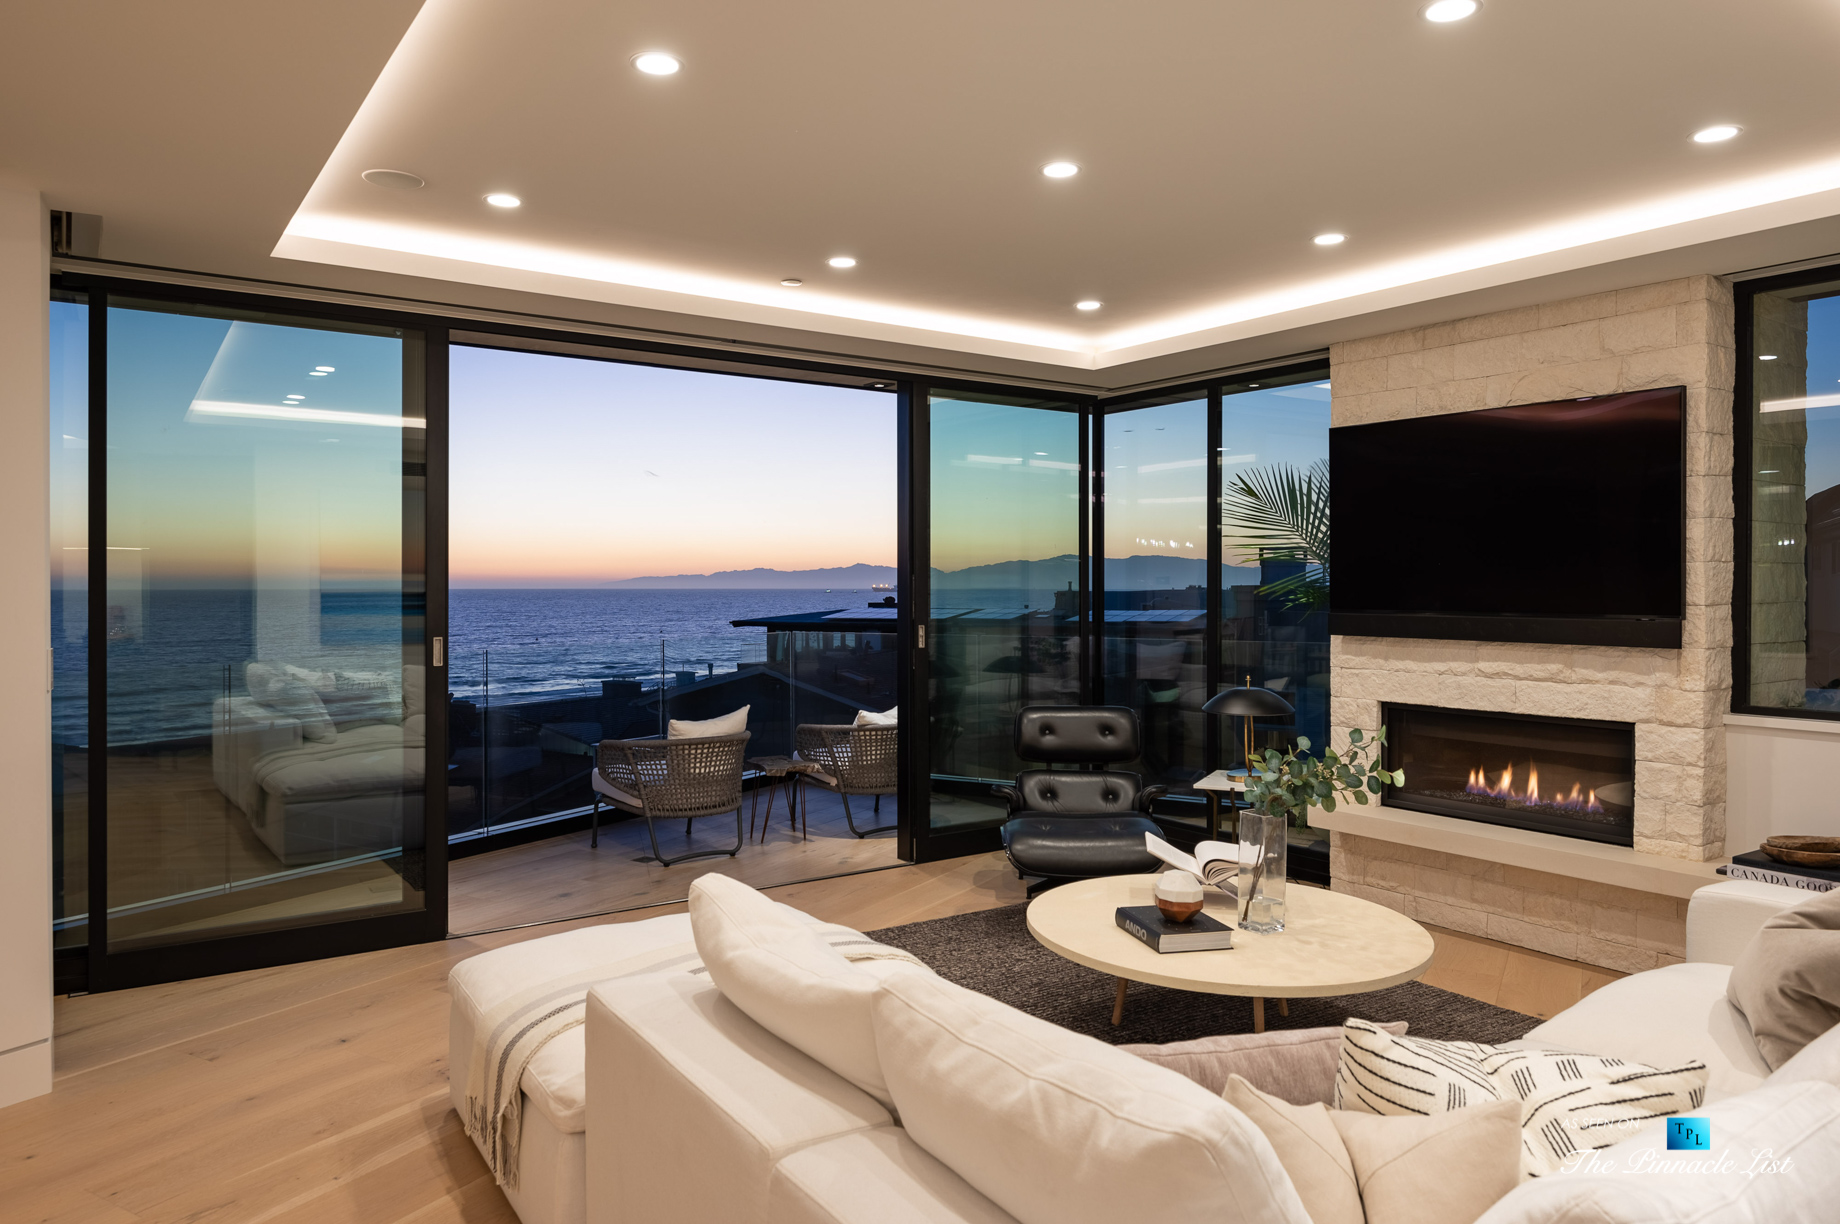 2016 Ocean Dr, Manhattan Beach, CA, USA - Master Bedroom Sunset - Luxury Real Estate - Modern Ocean View Home